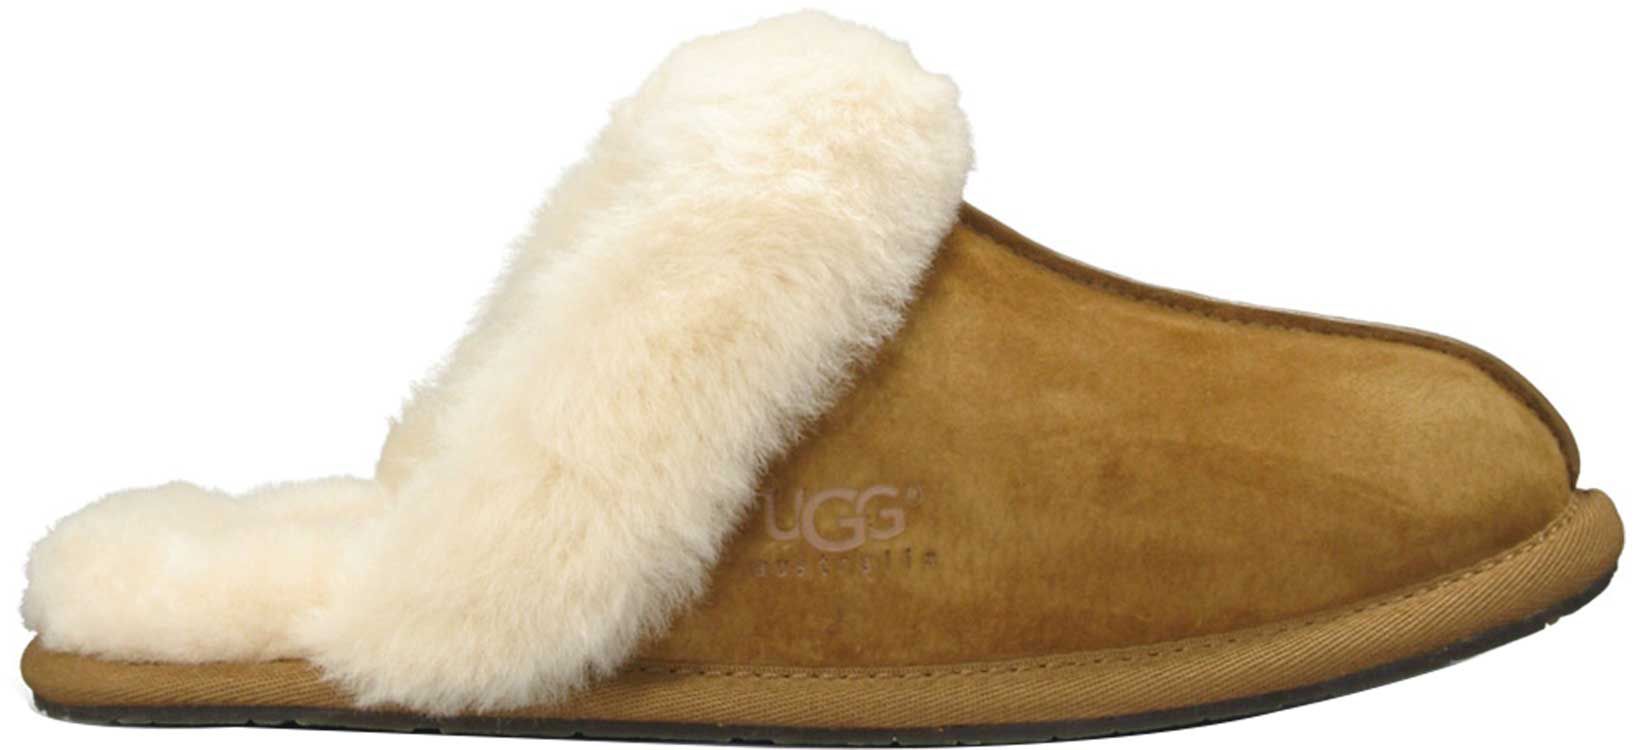 ugg slippers best price